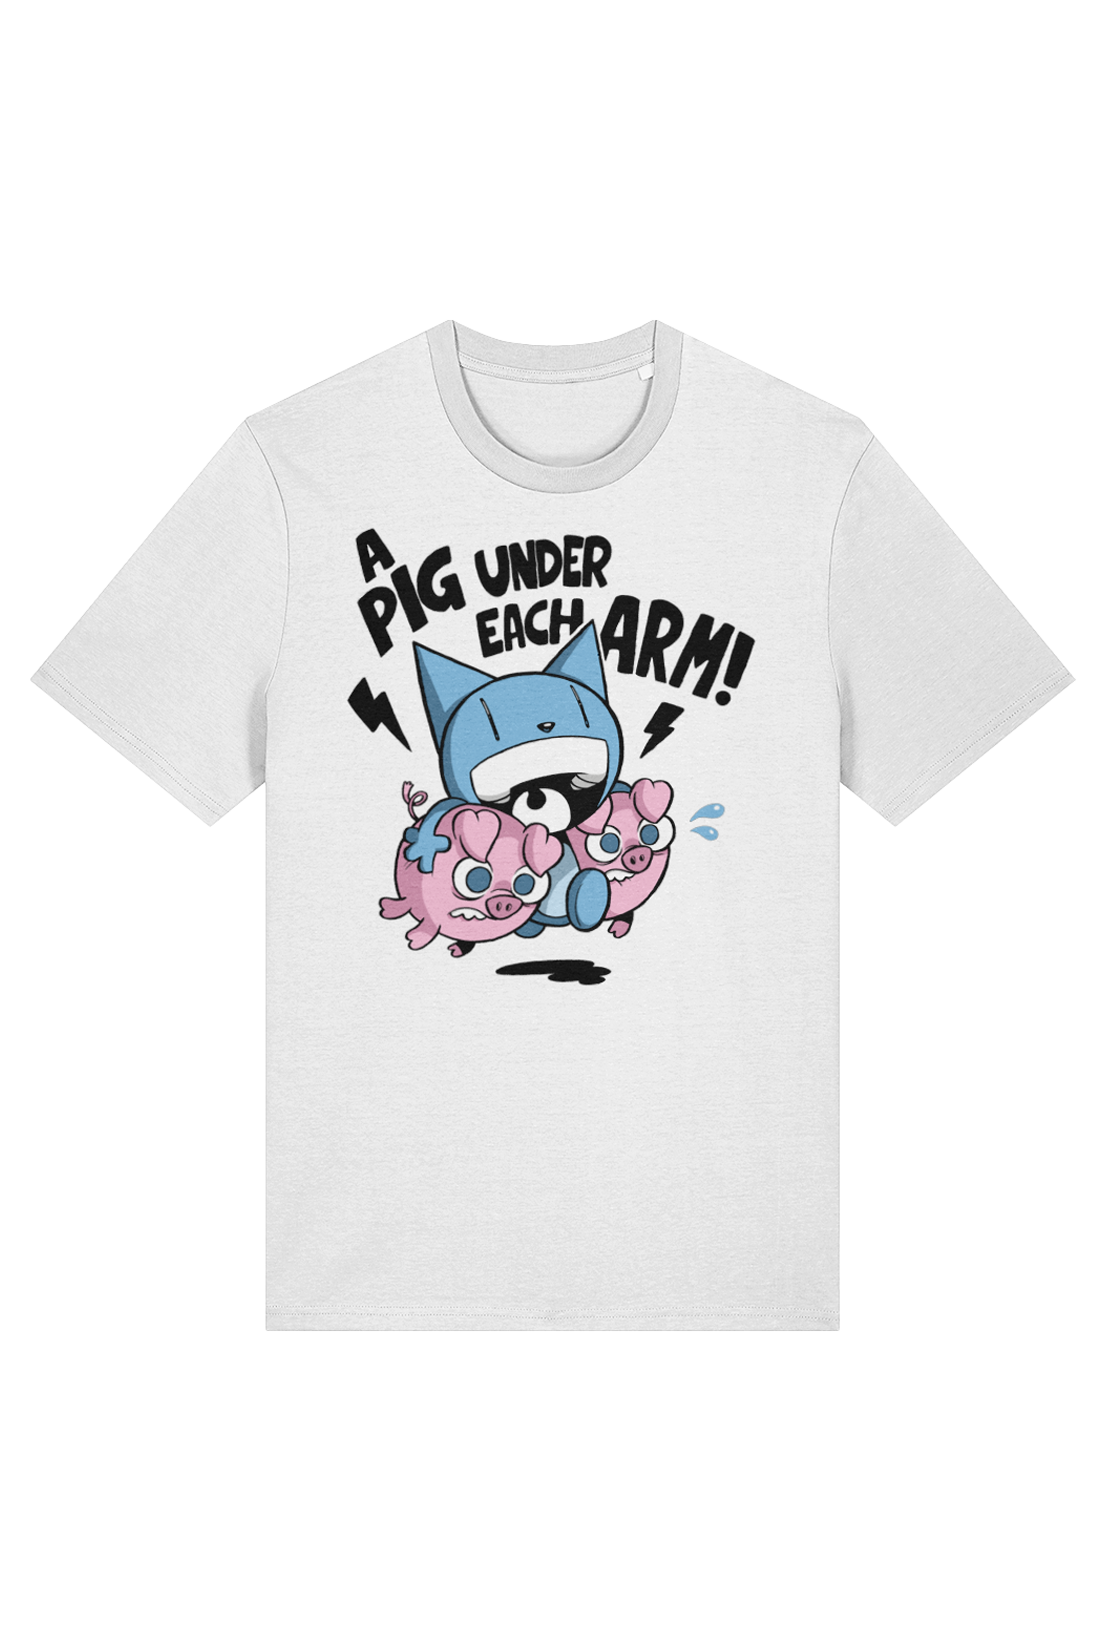 Looshkin "A pig under each arm!" adult t-shirt